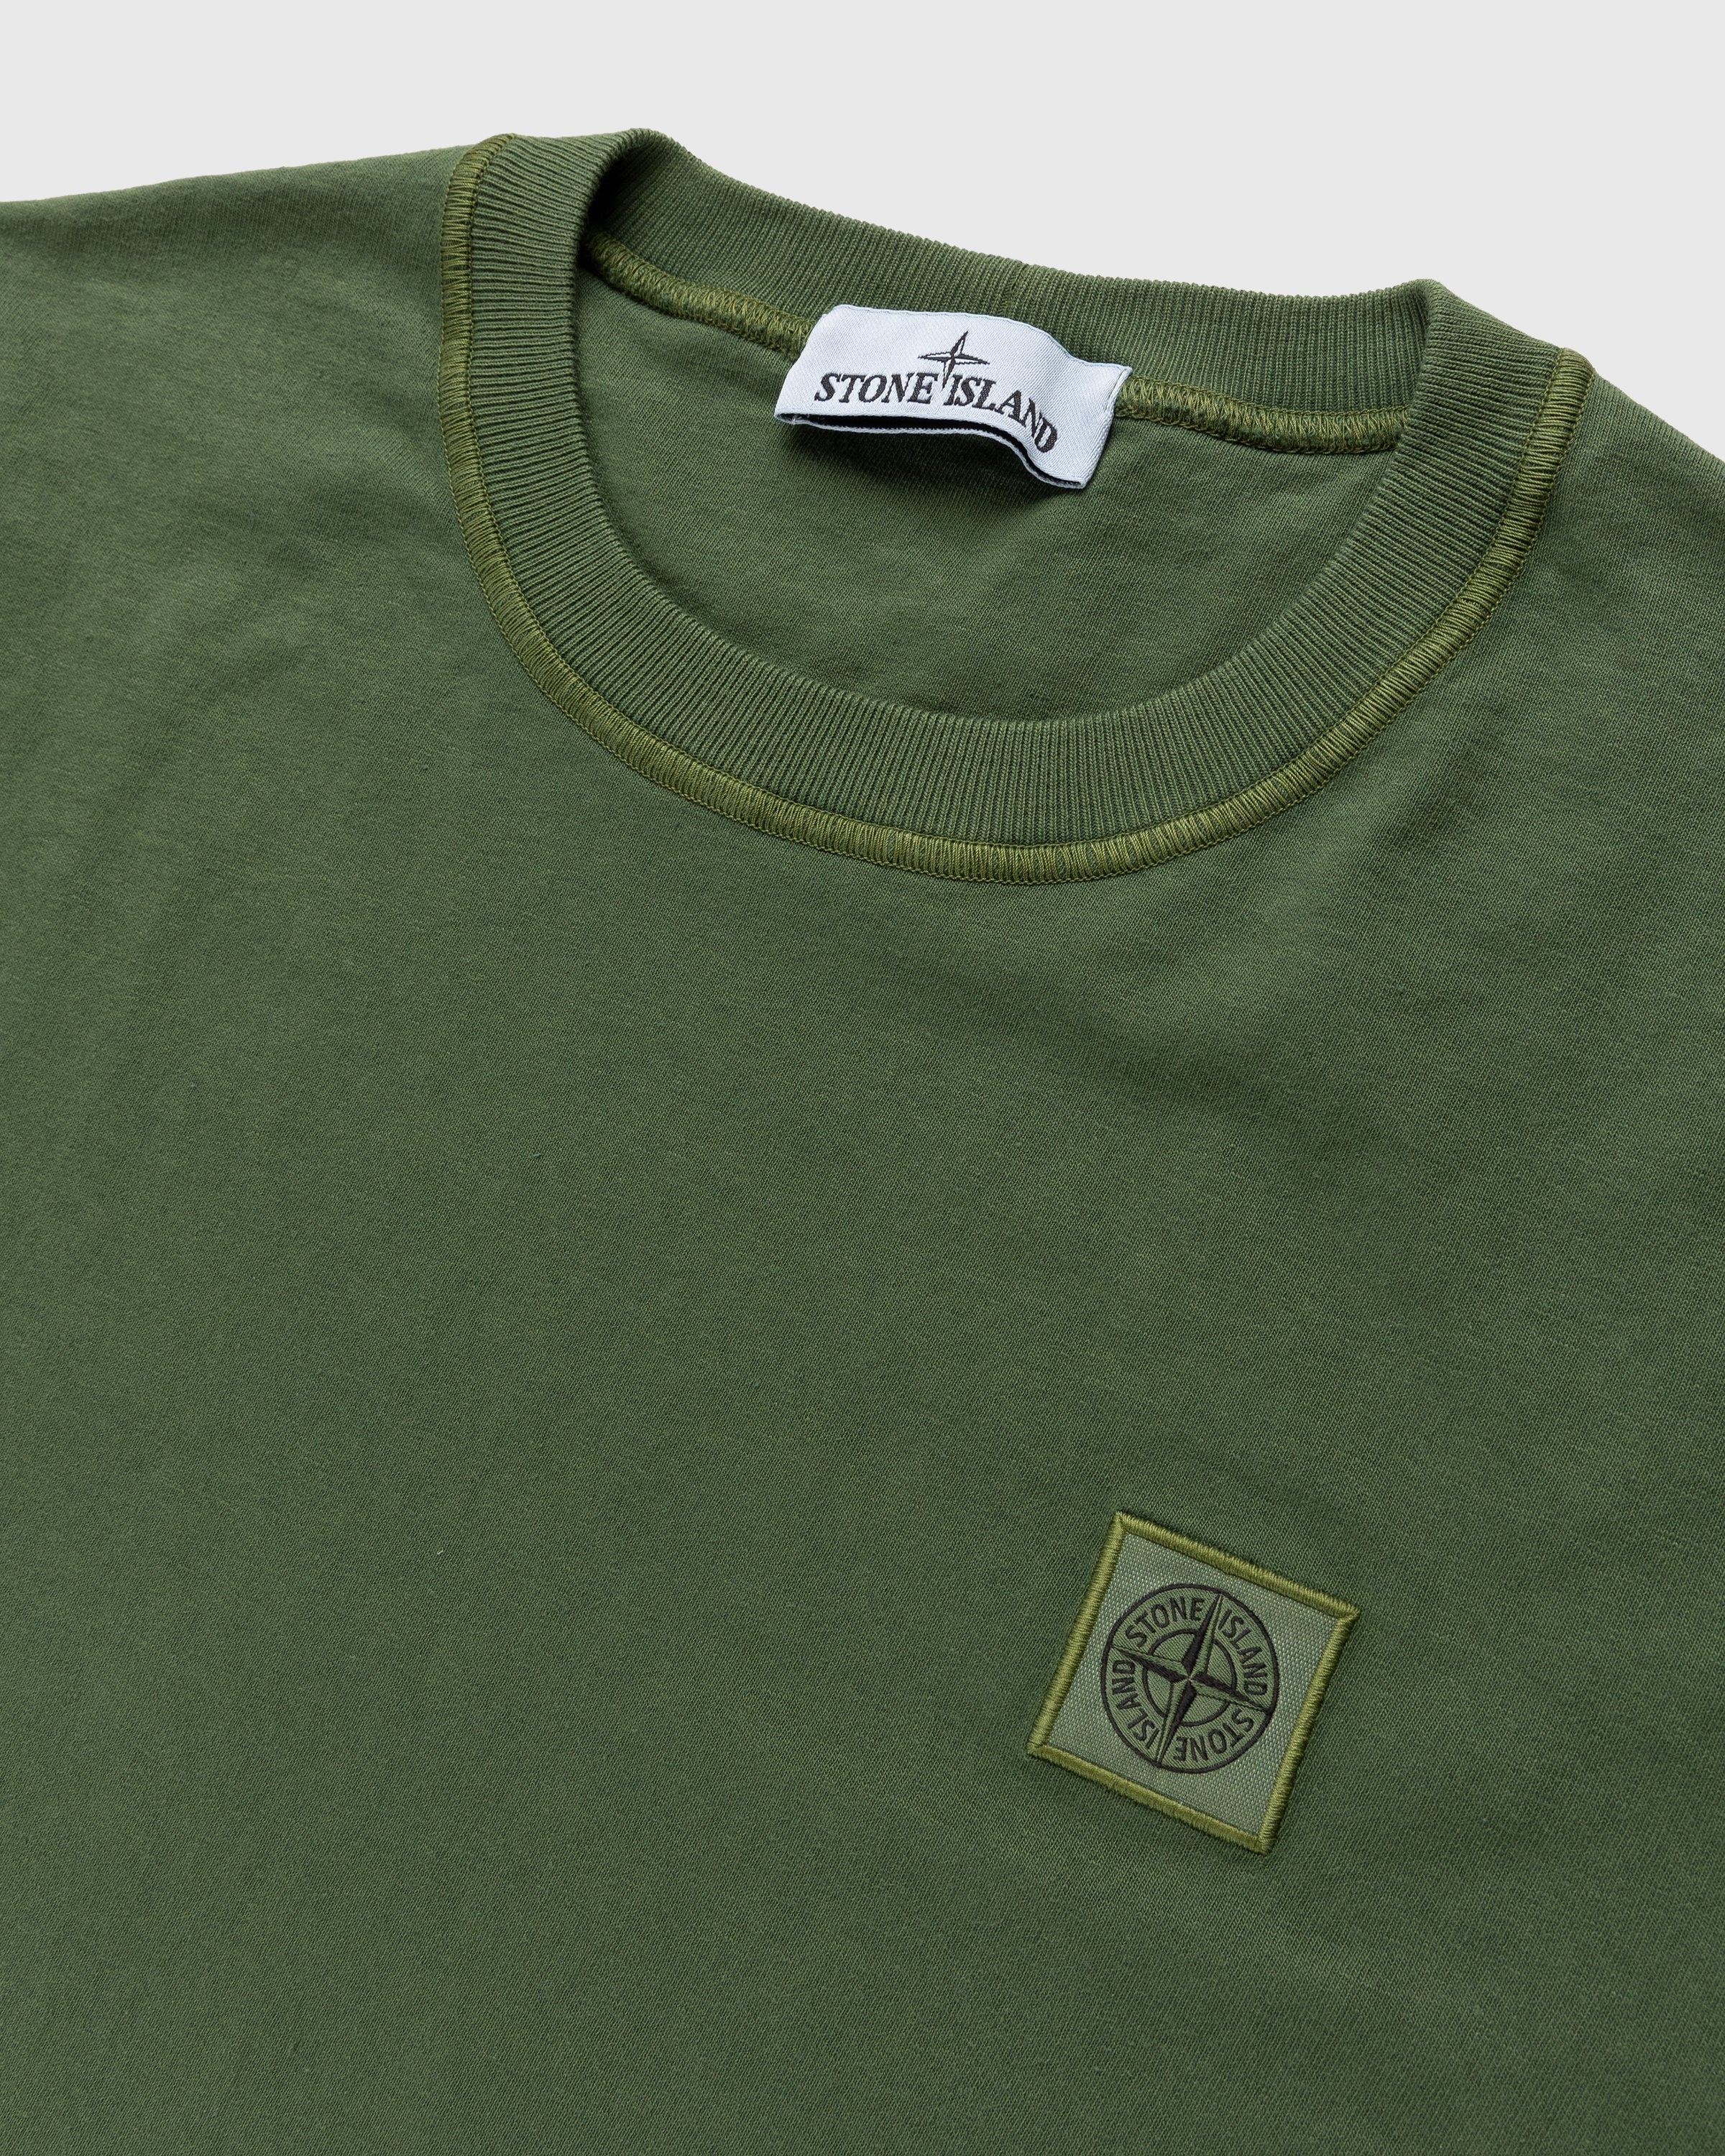 Stone Island – Fissato Longsleeve T-Shirt Olive - Longsleeves - Green - Image 4